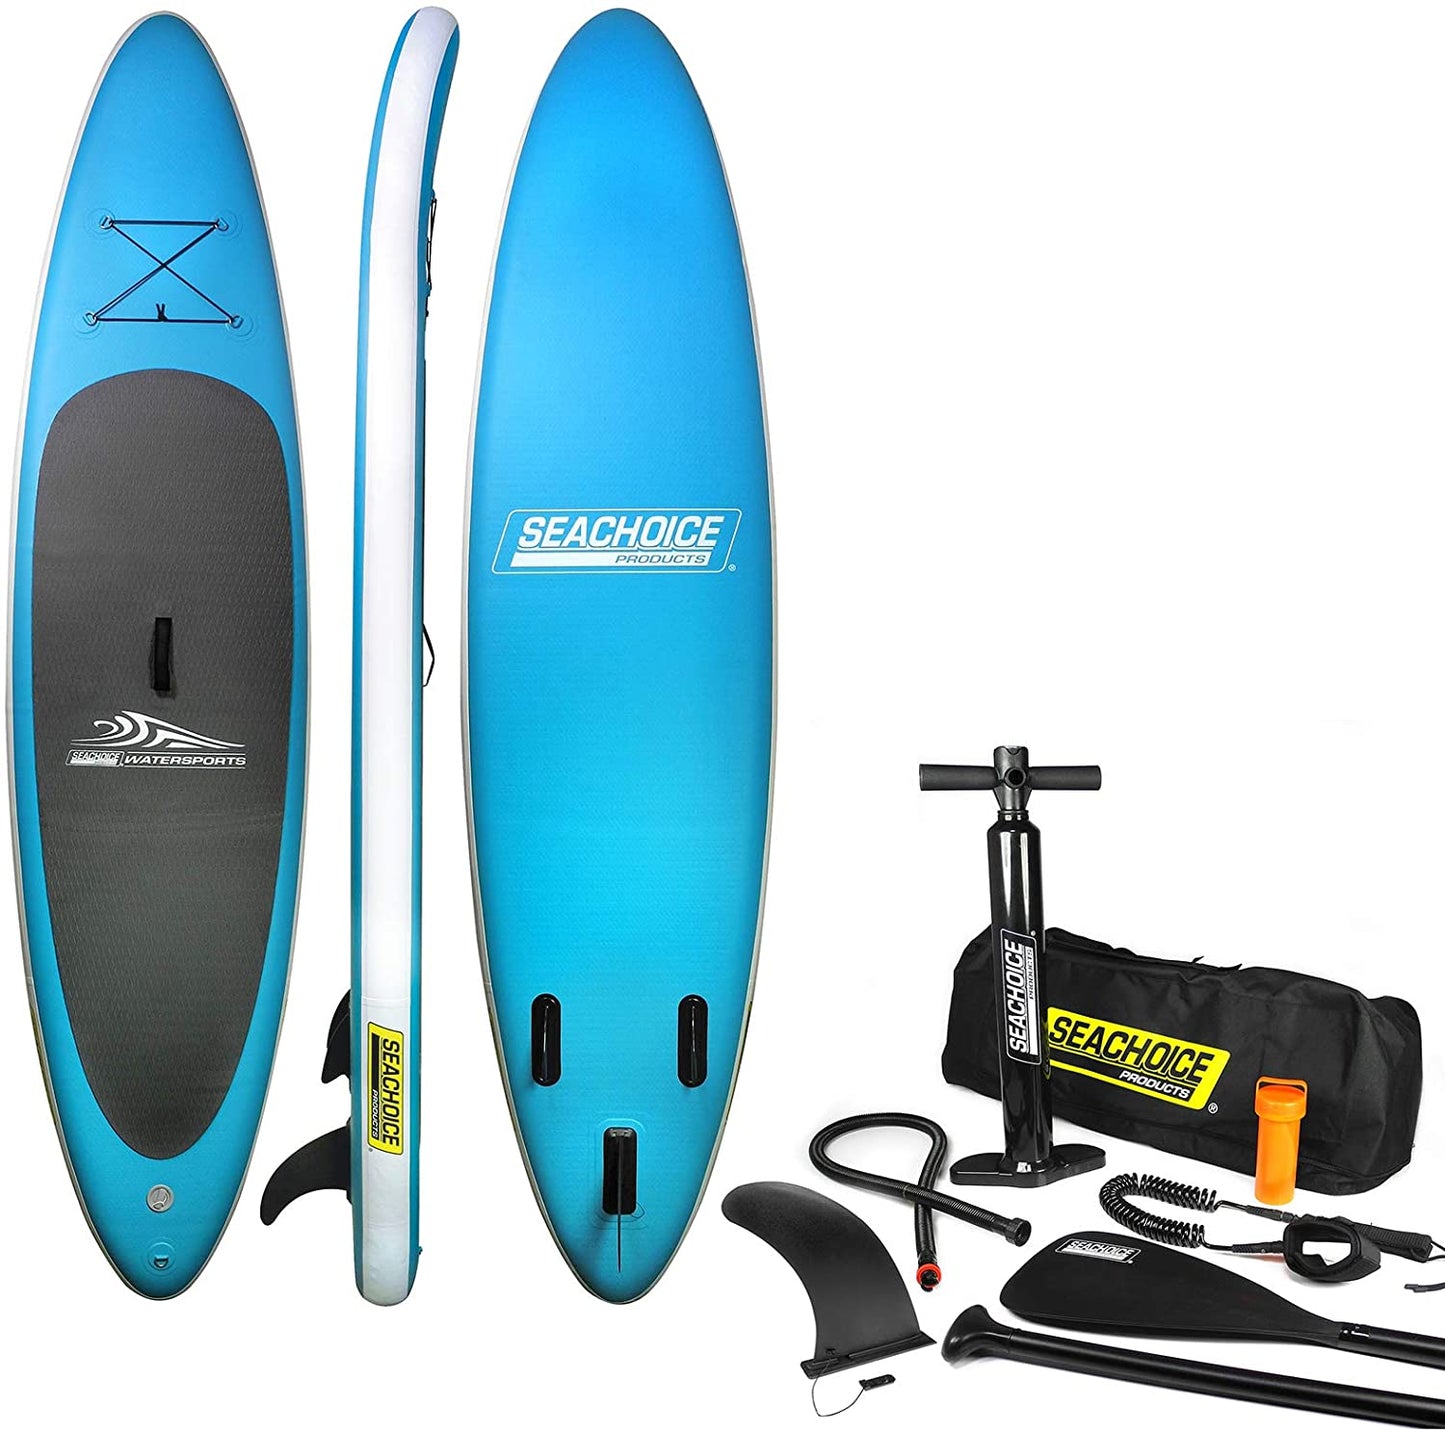 Seachoice 10'6" Inflatable Stand-Up Paddle Board Kit Aqua Blue